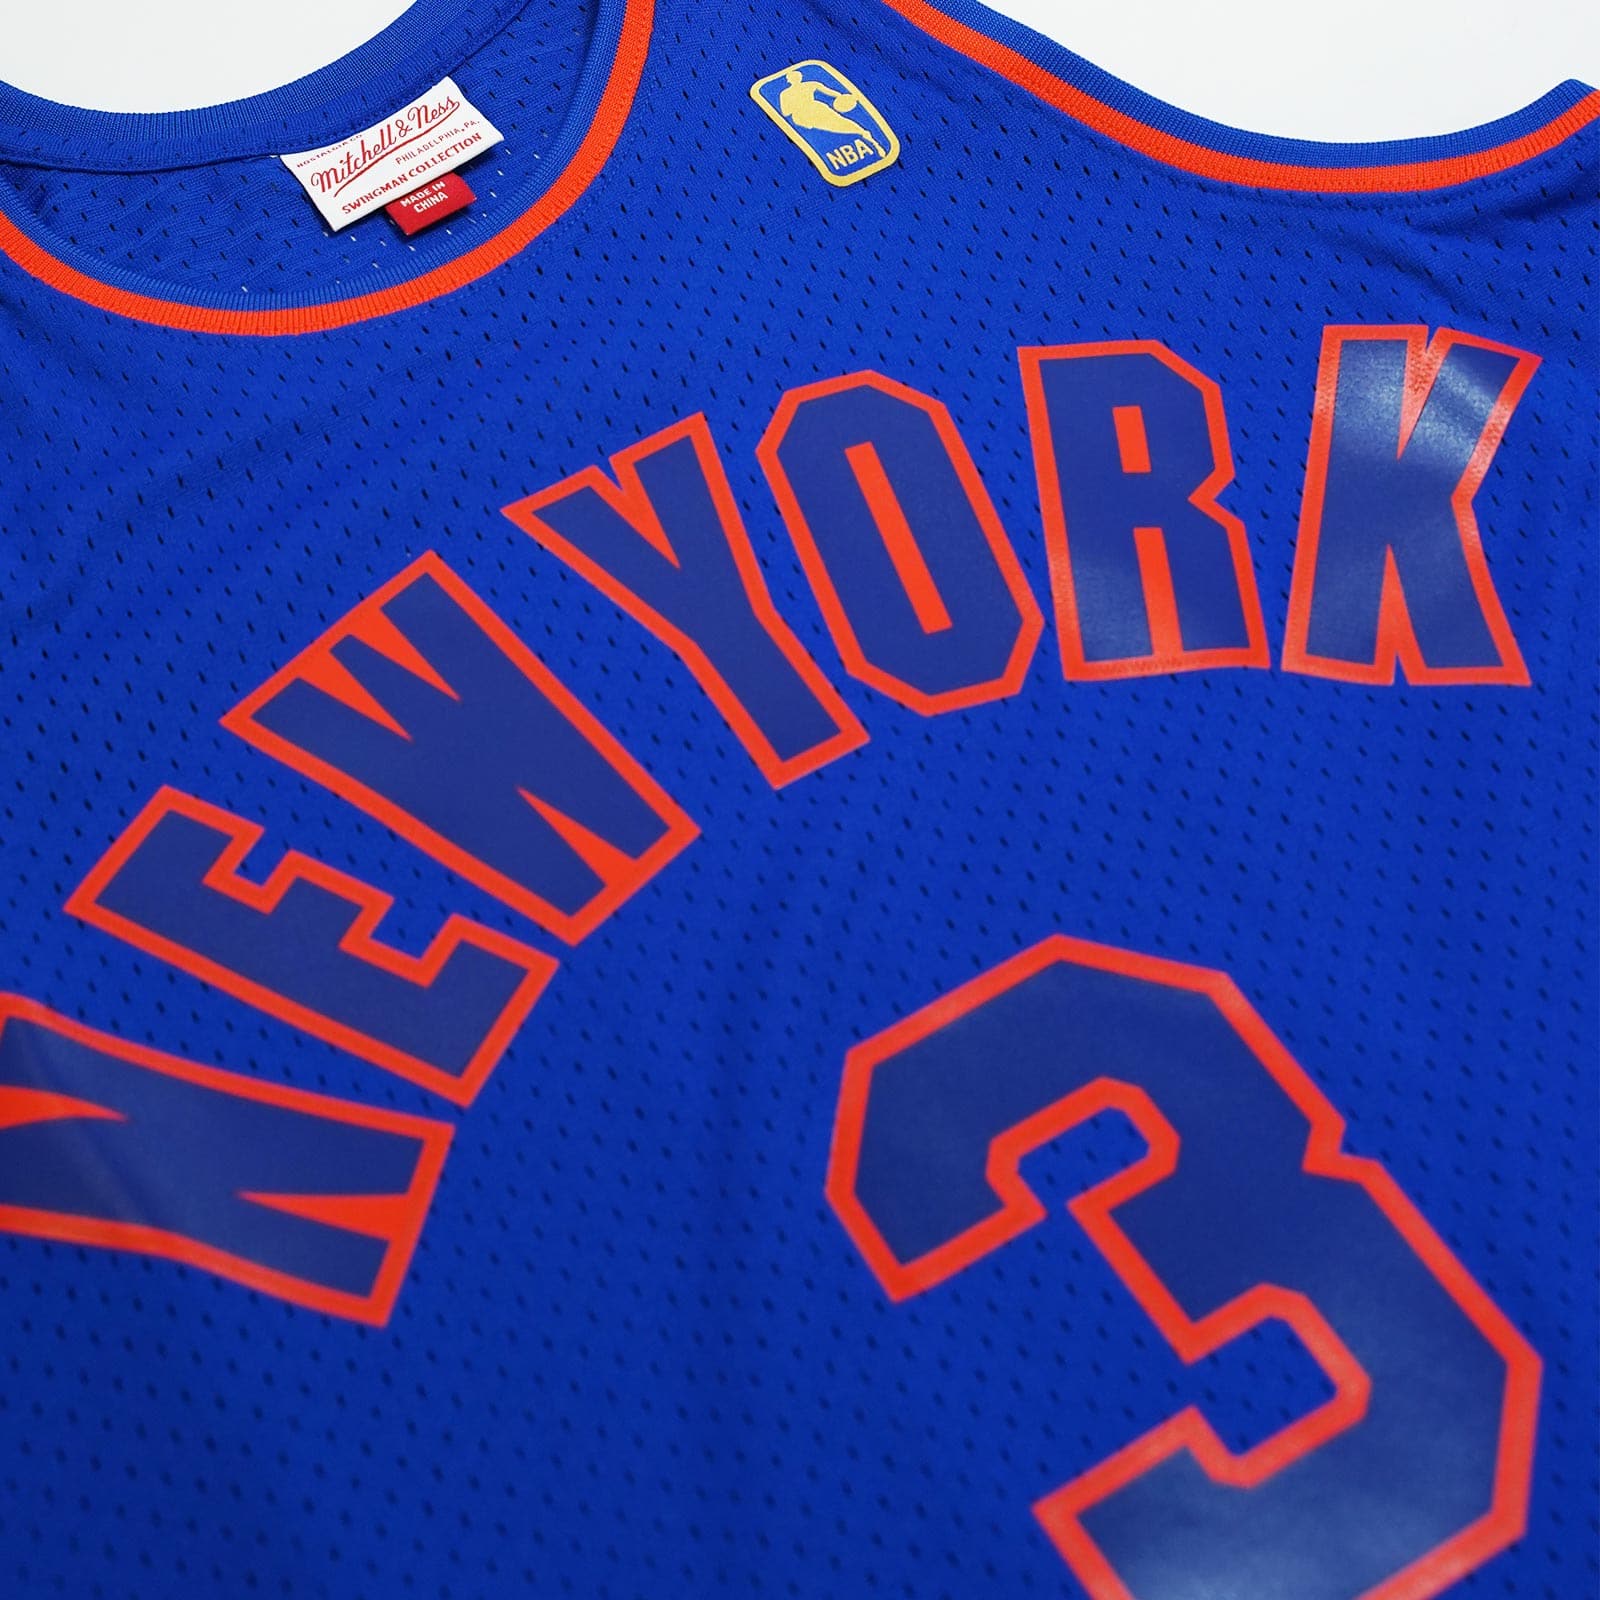 John Starks New York Knicks Mitchell & Ness Hardwood Classics